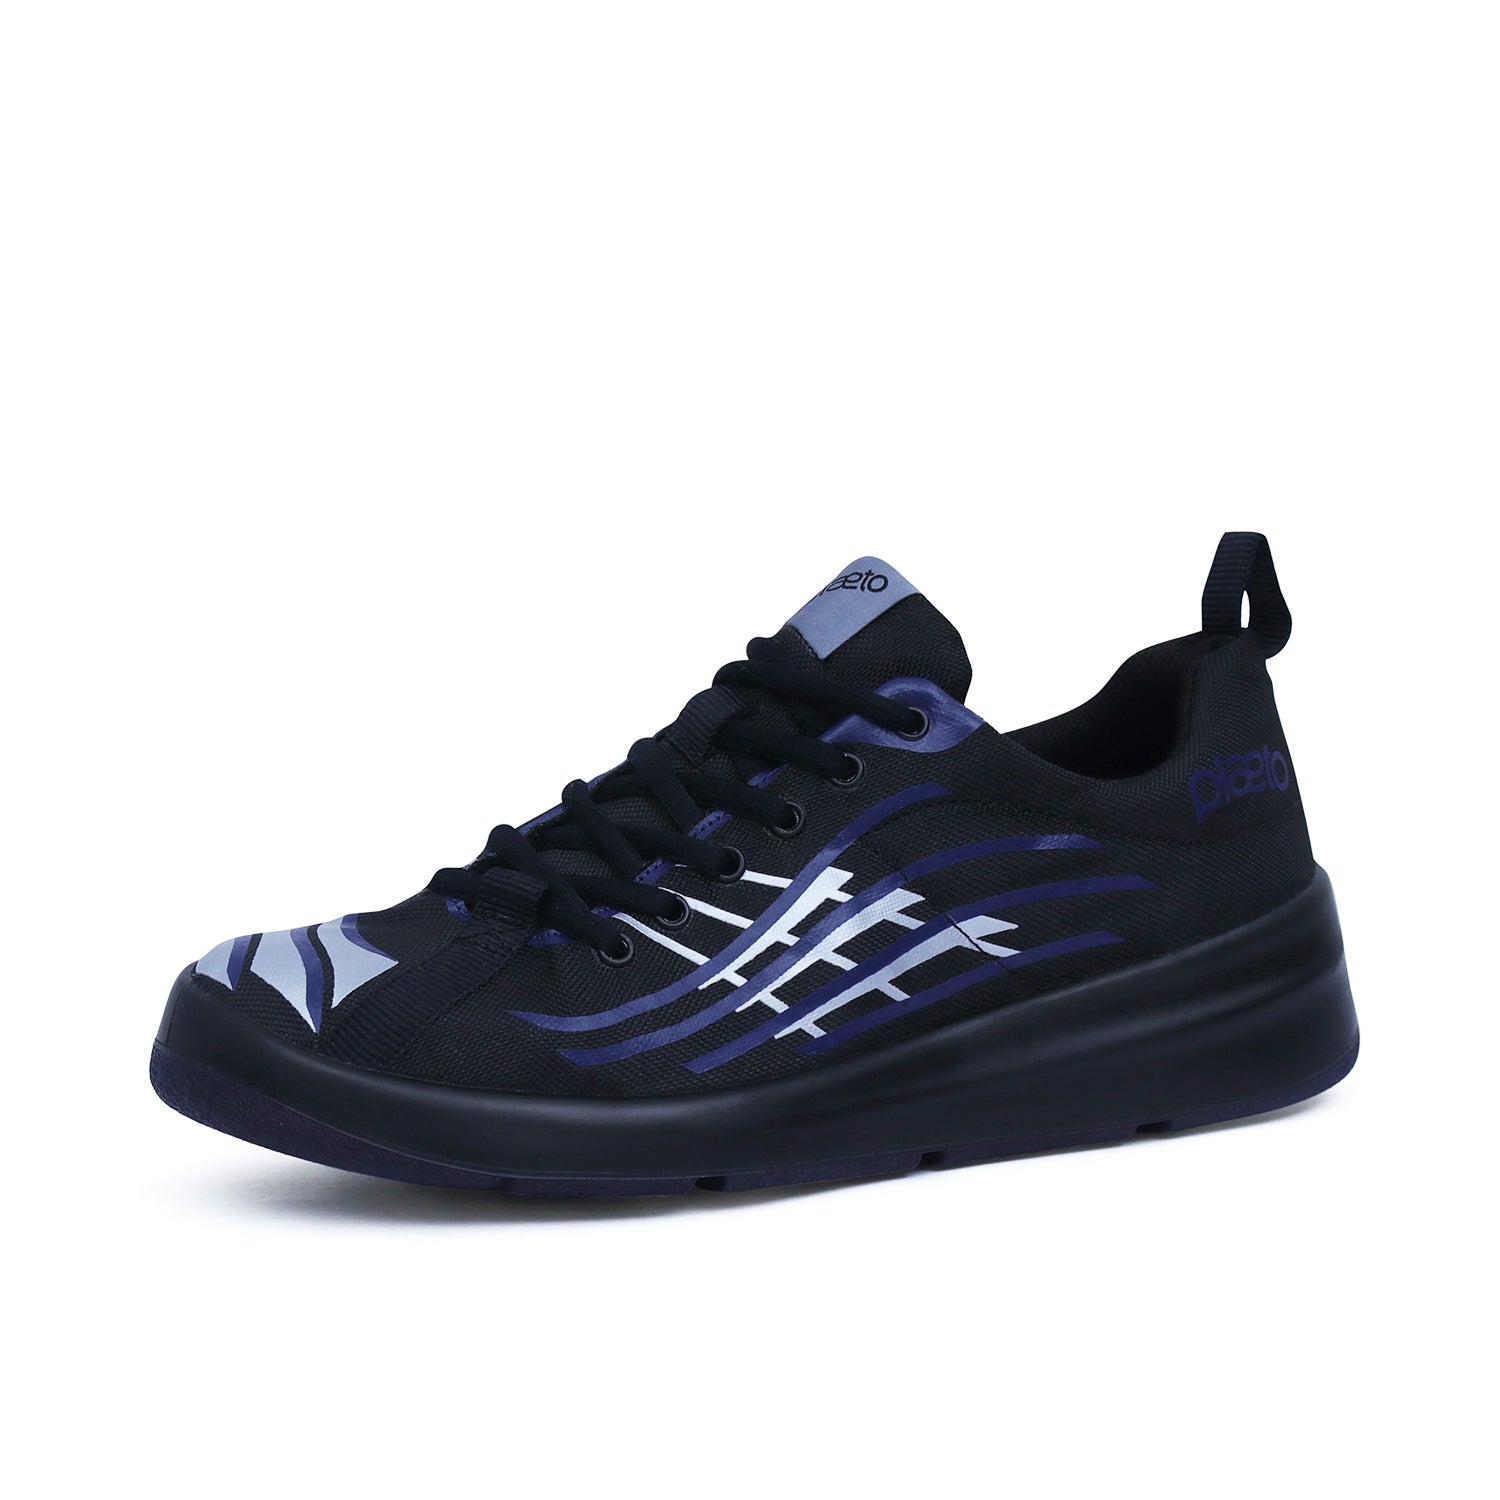 Nova Men's Sports Shoes - Black / Navy Blue